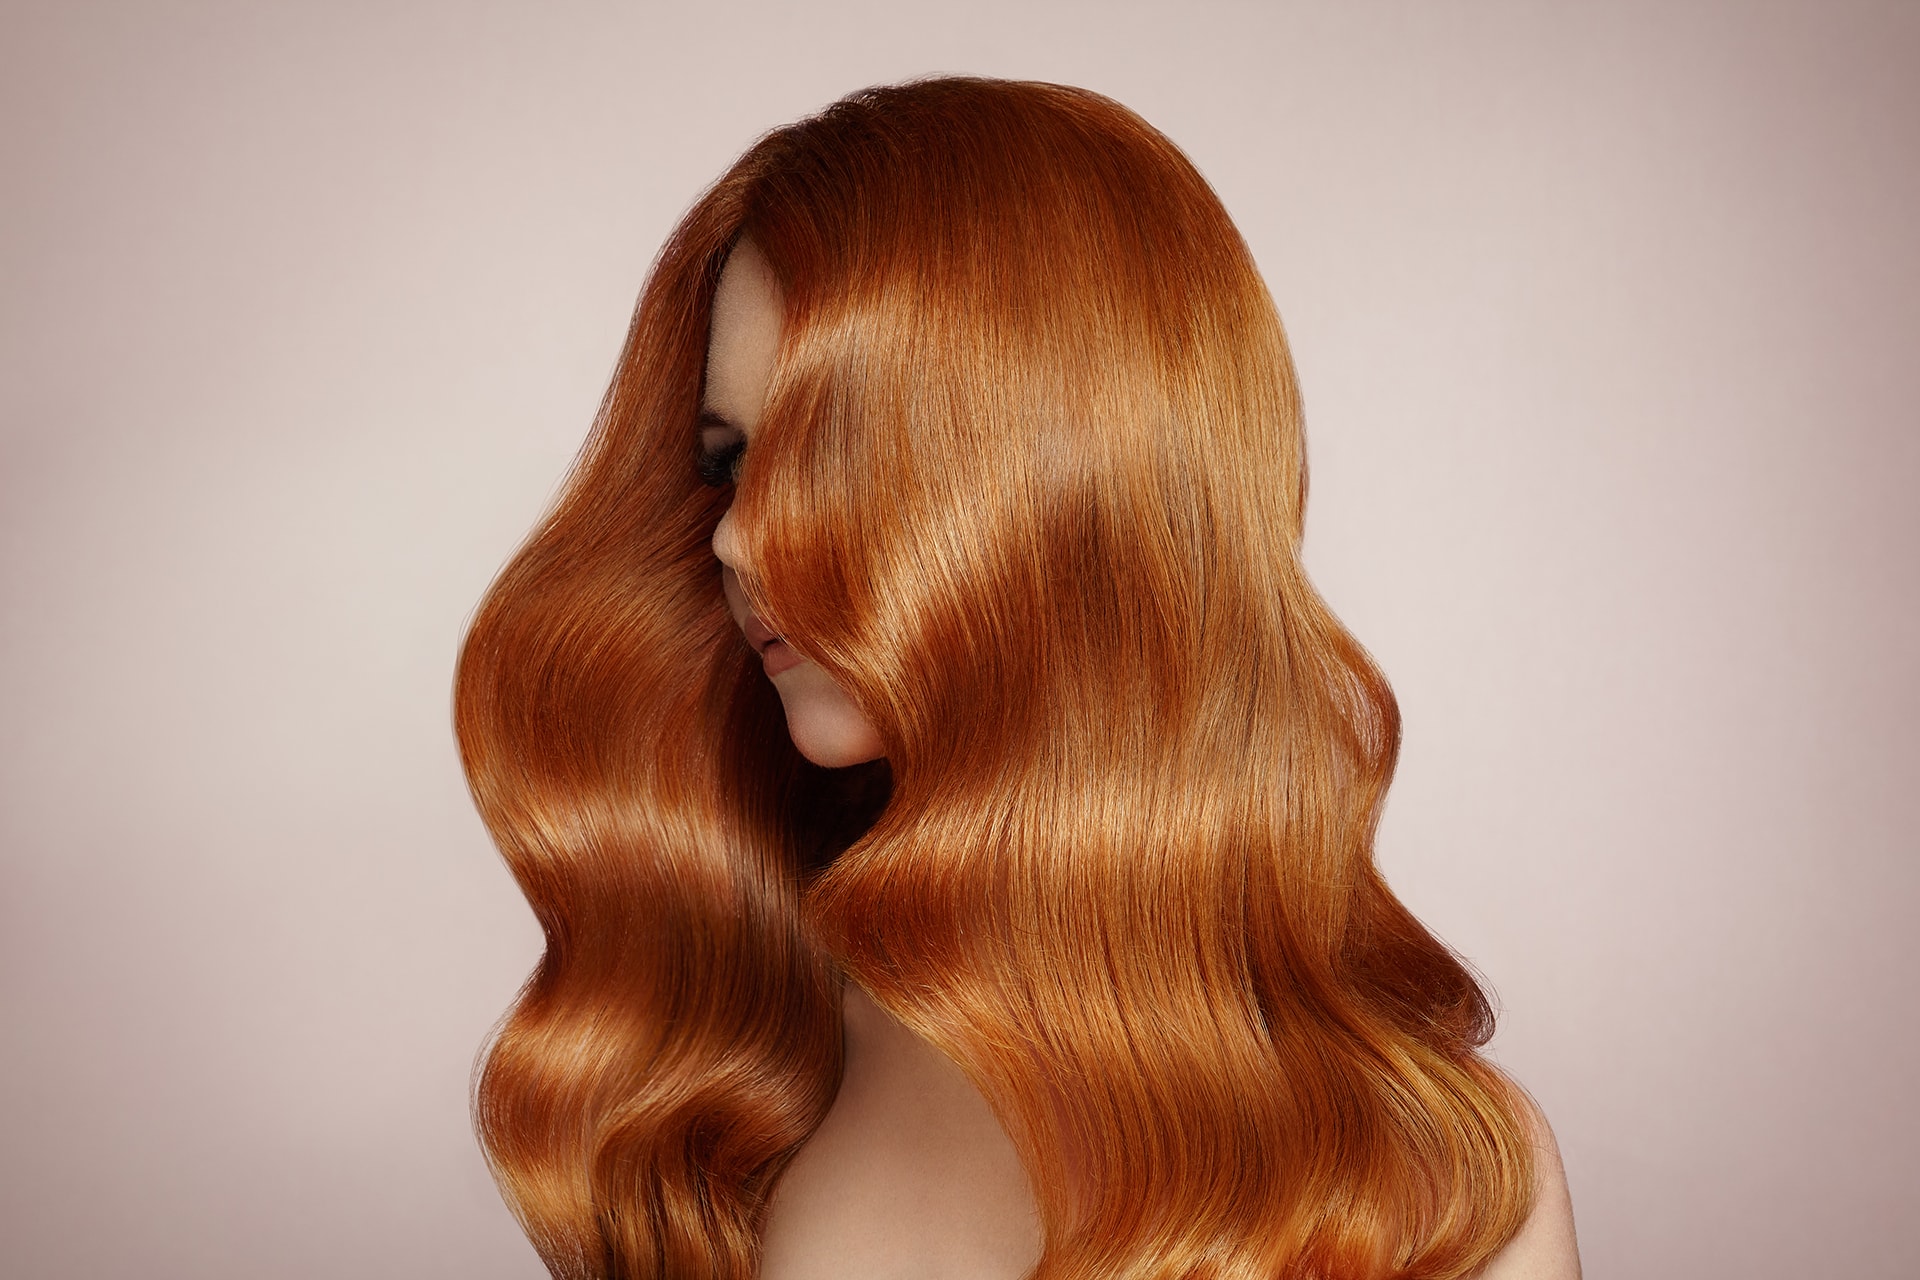 redhead-woman-with-curly-hair-EA6VCZL-min.jpg